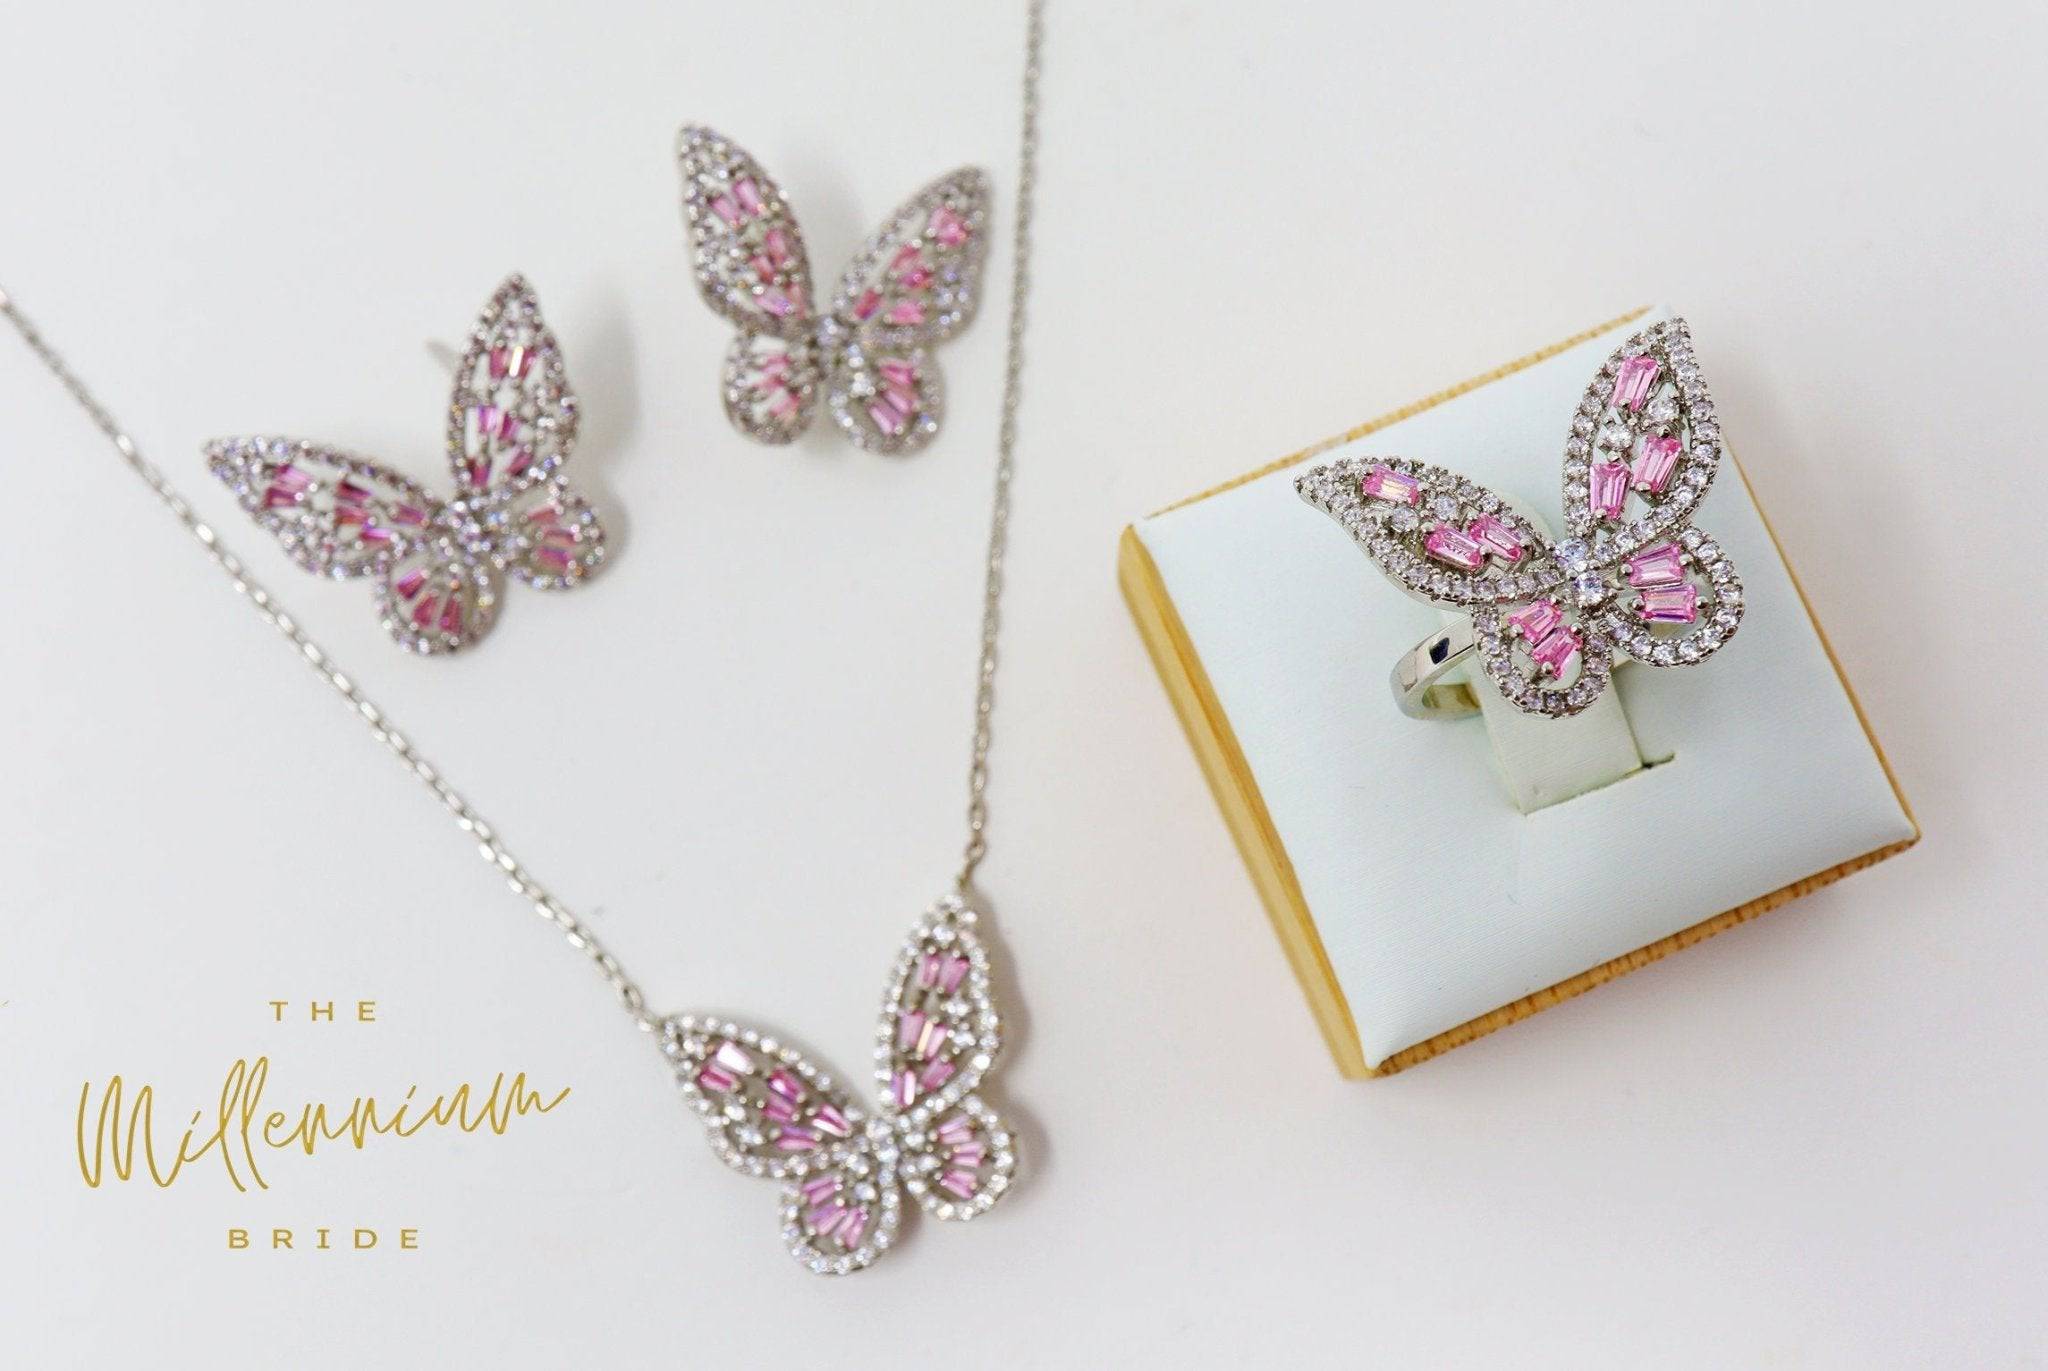 swarovski crystal butterfly necklace signed goldplated 18” elegant 7 | eBay